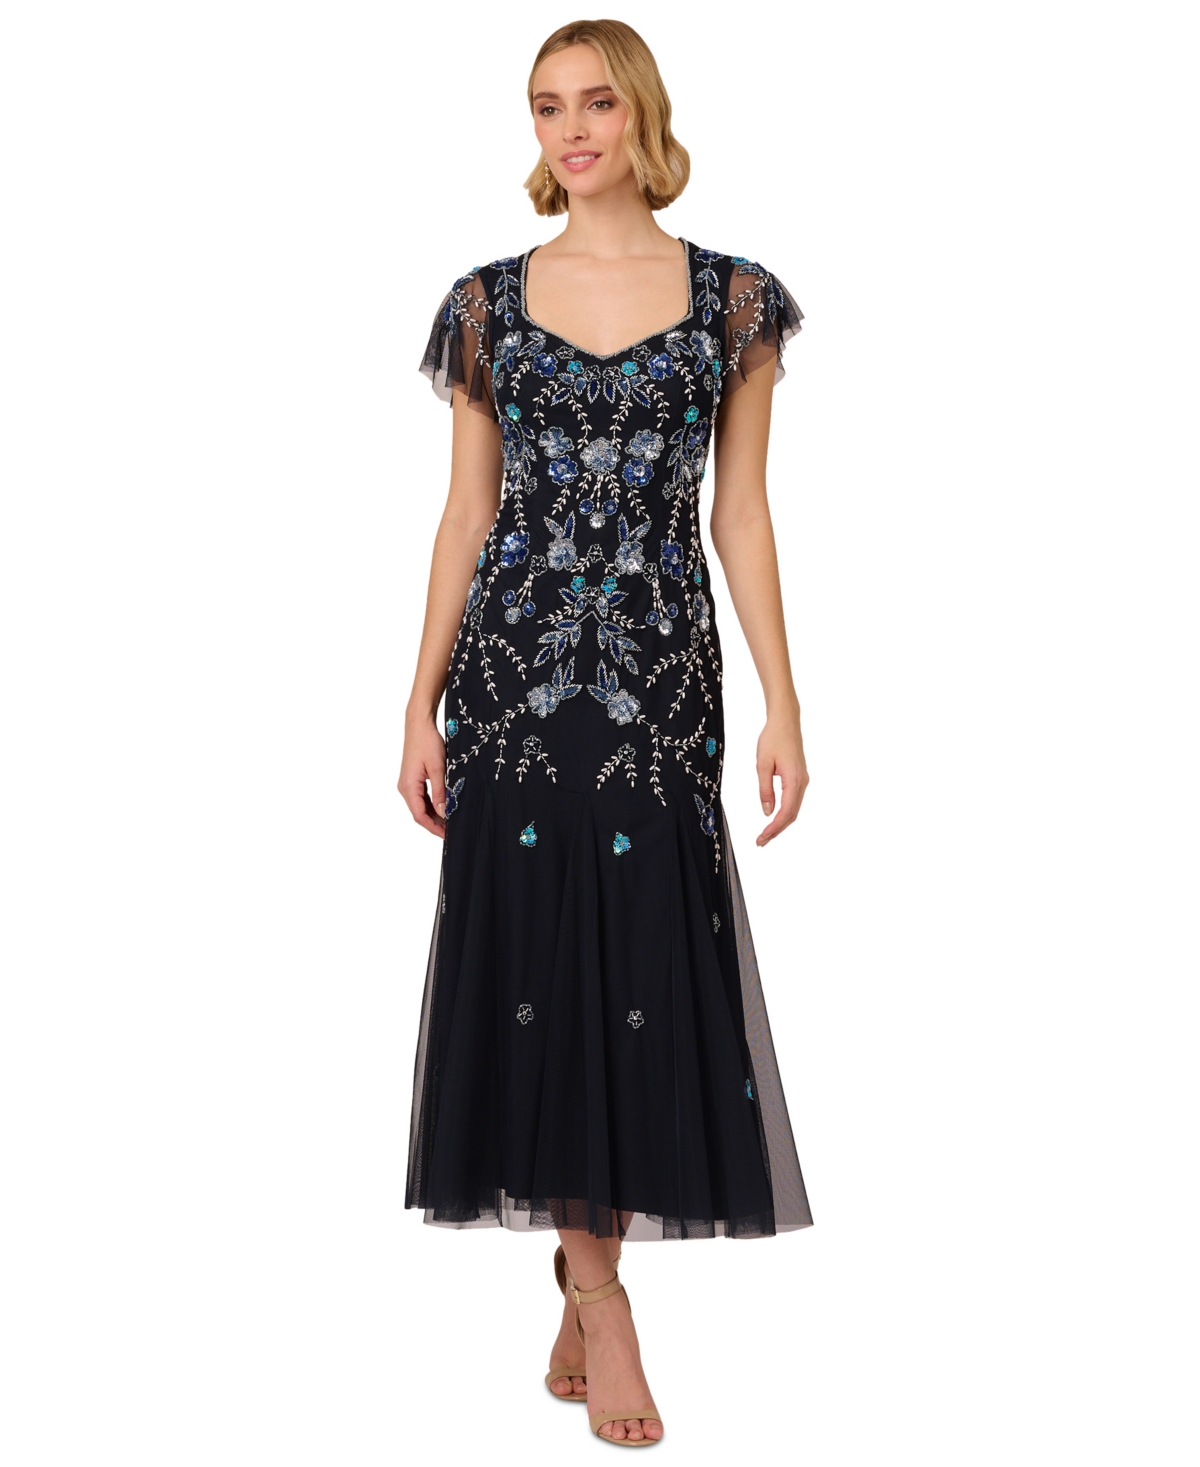 Women's Embellished Godet-Pleated Dress - Midnight Multi